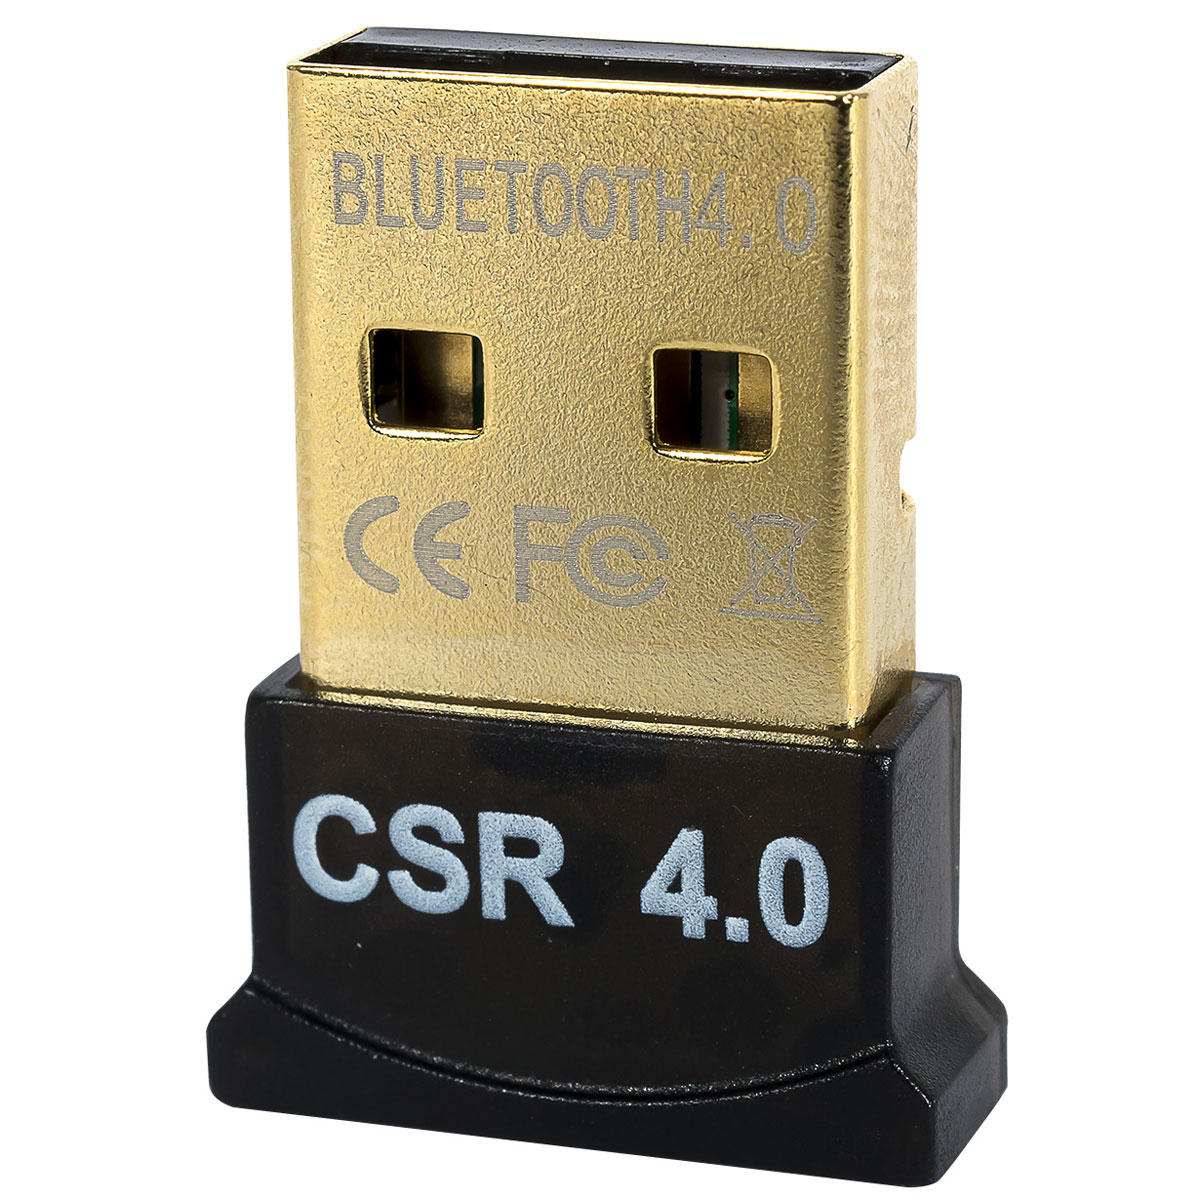 I5100/I7100 BLUETOOTH USB ADAPTER